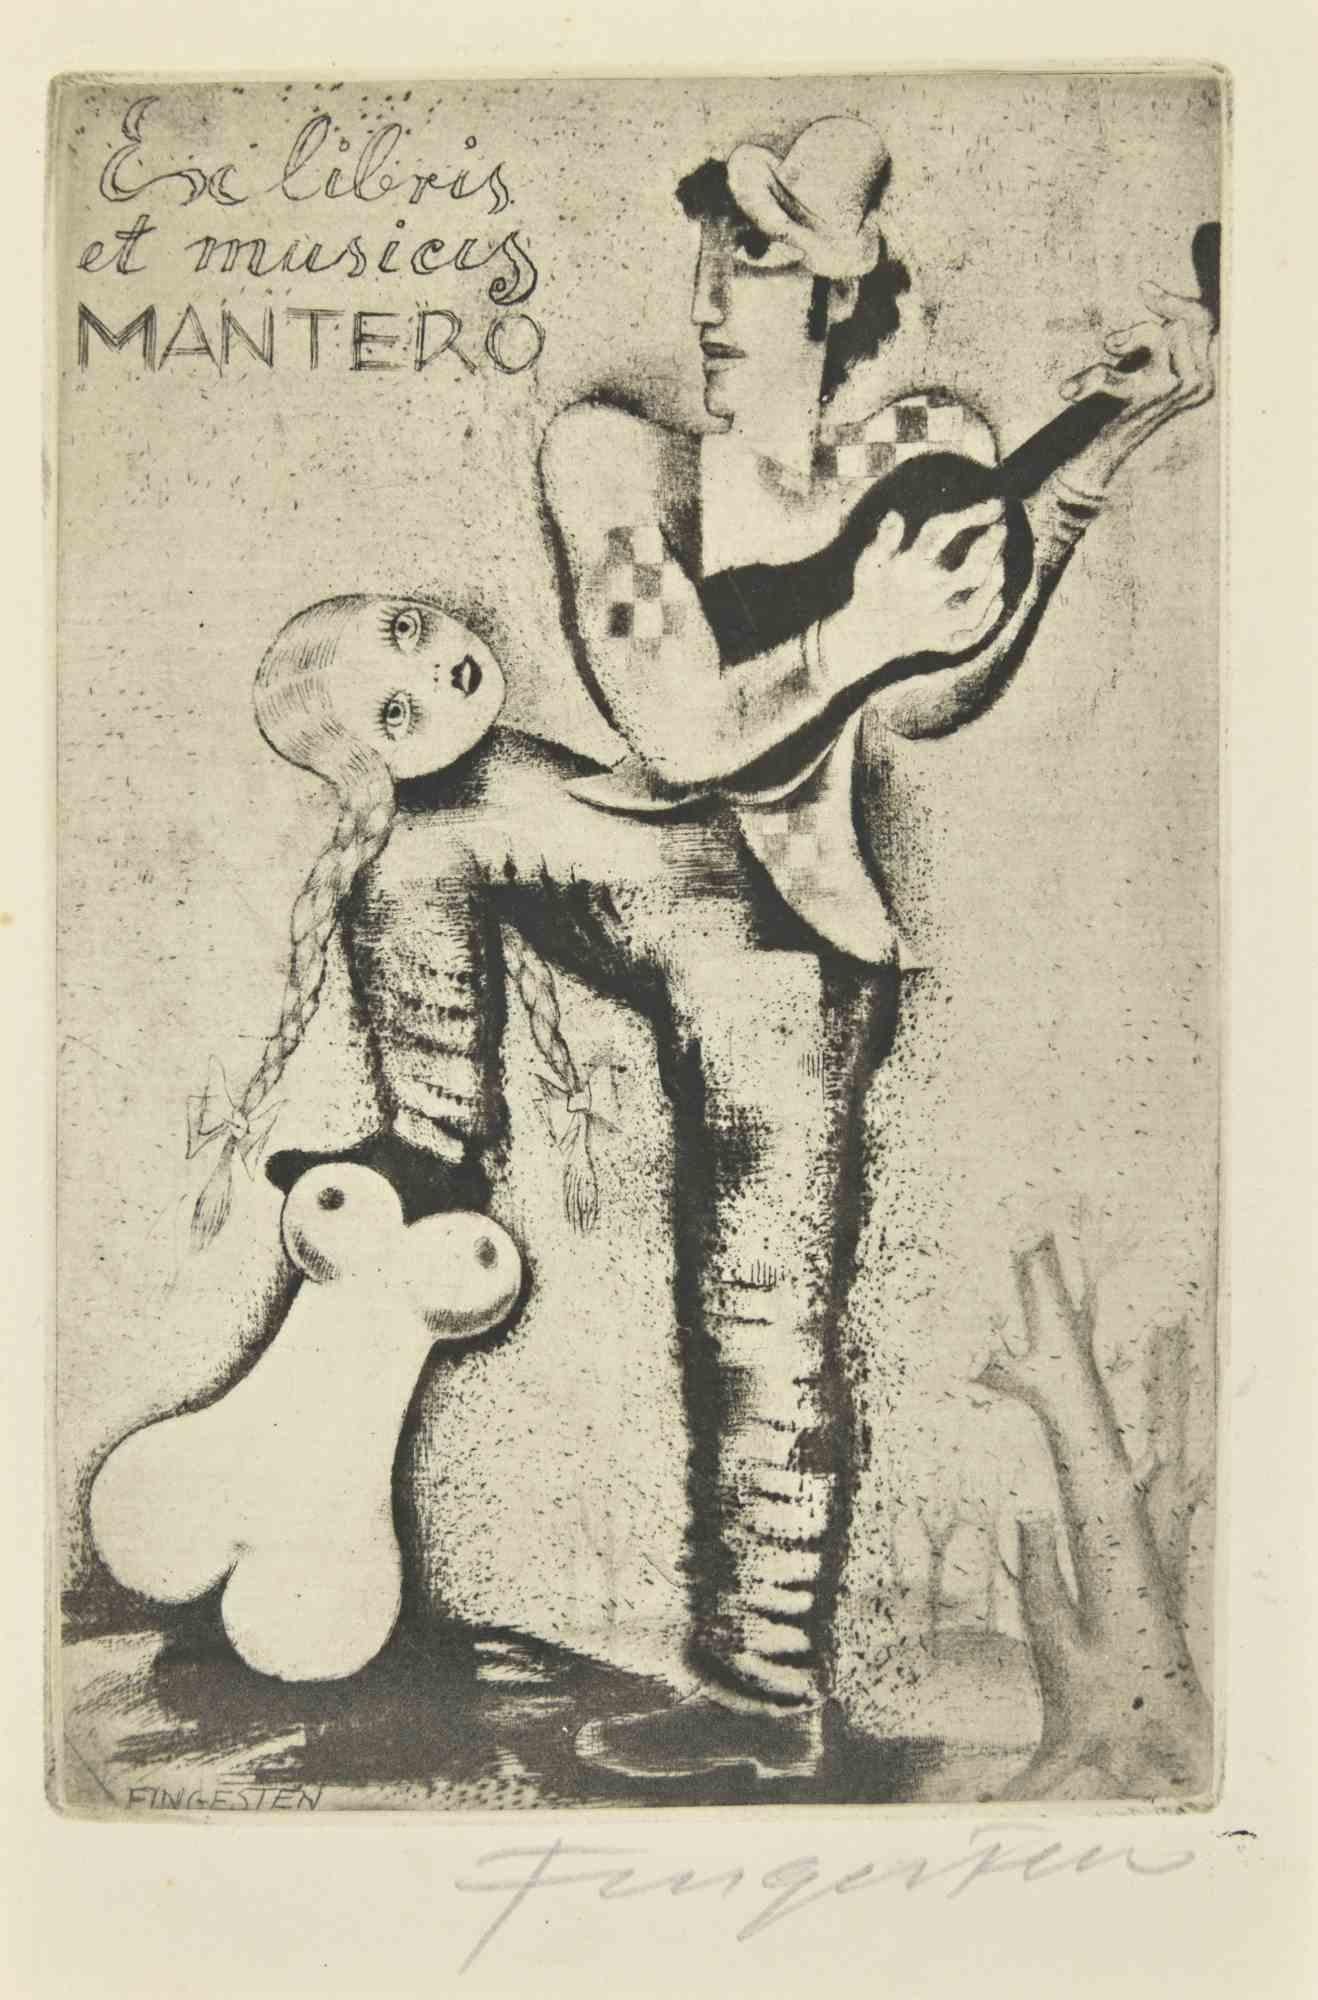 Ex Libris et Musicis Mantero - Etching by Michel Fingesten - 1930s